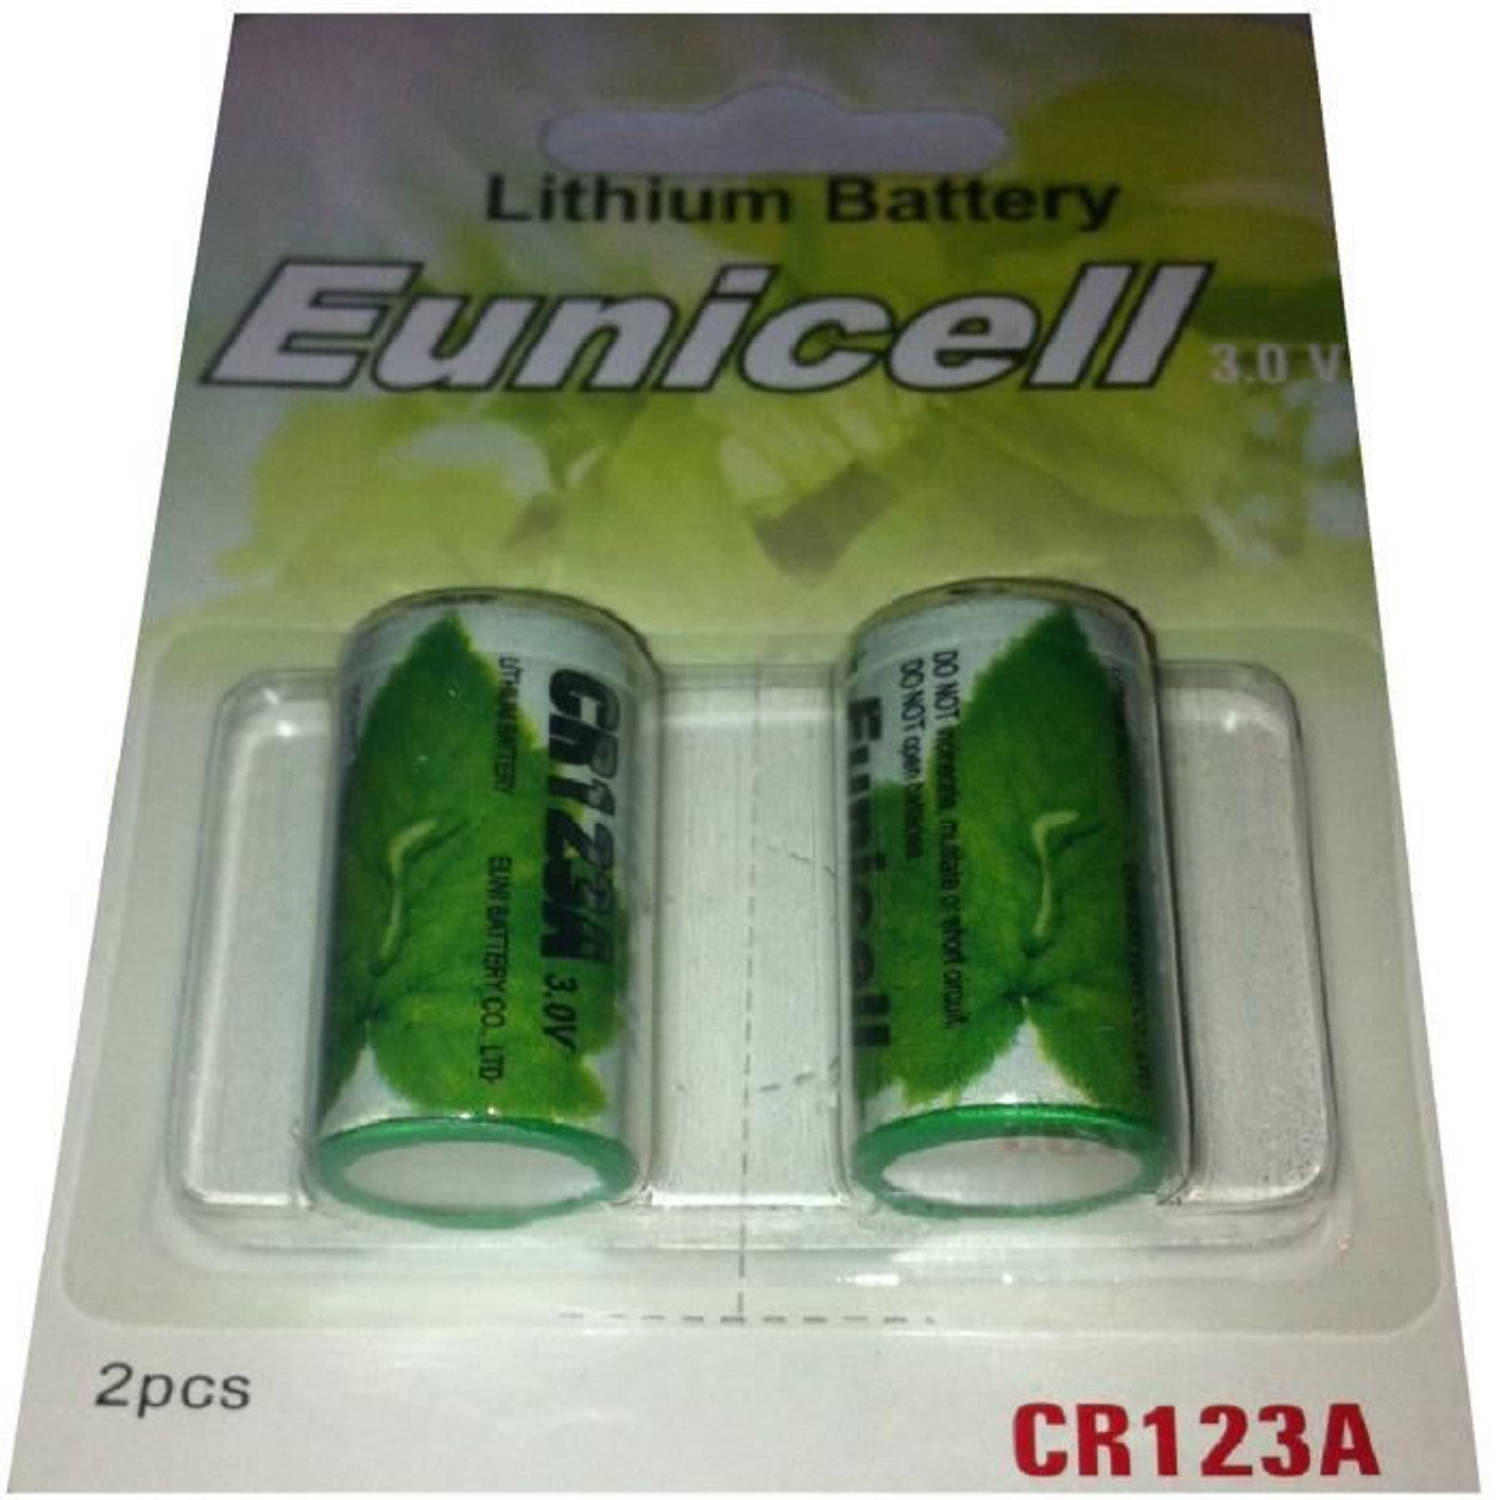 Eunicell - 2 batterijen CR123 CR123A LIT | Blokker